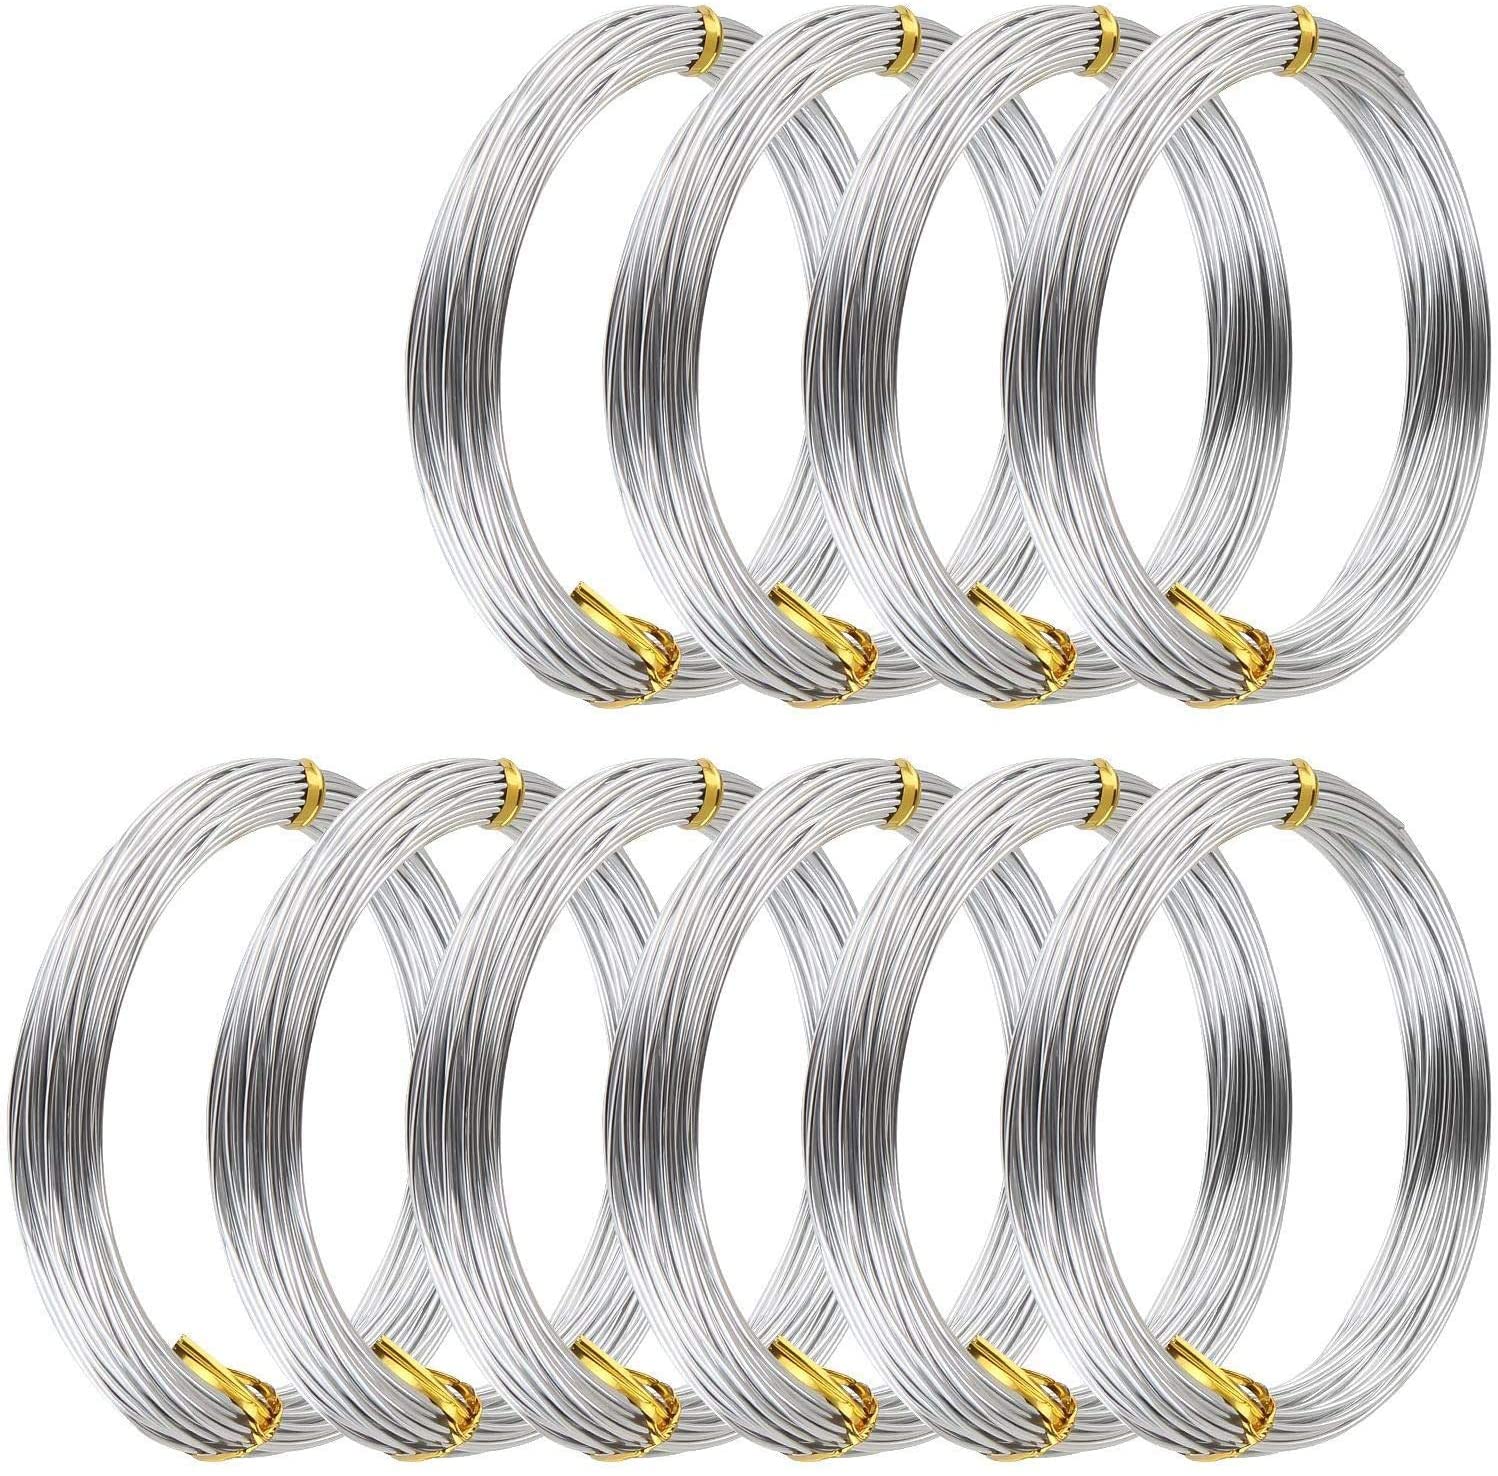 10 rollos de alambre de metal de aluminio flexible, calibre 18, alambr